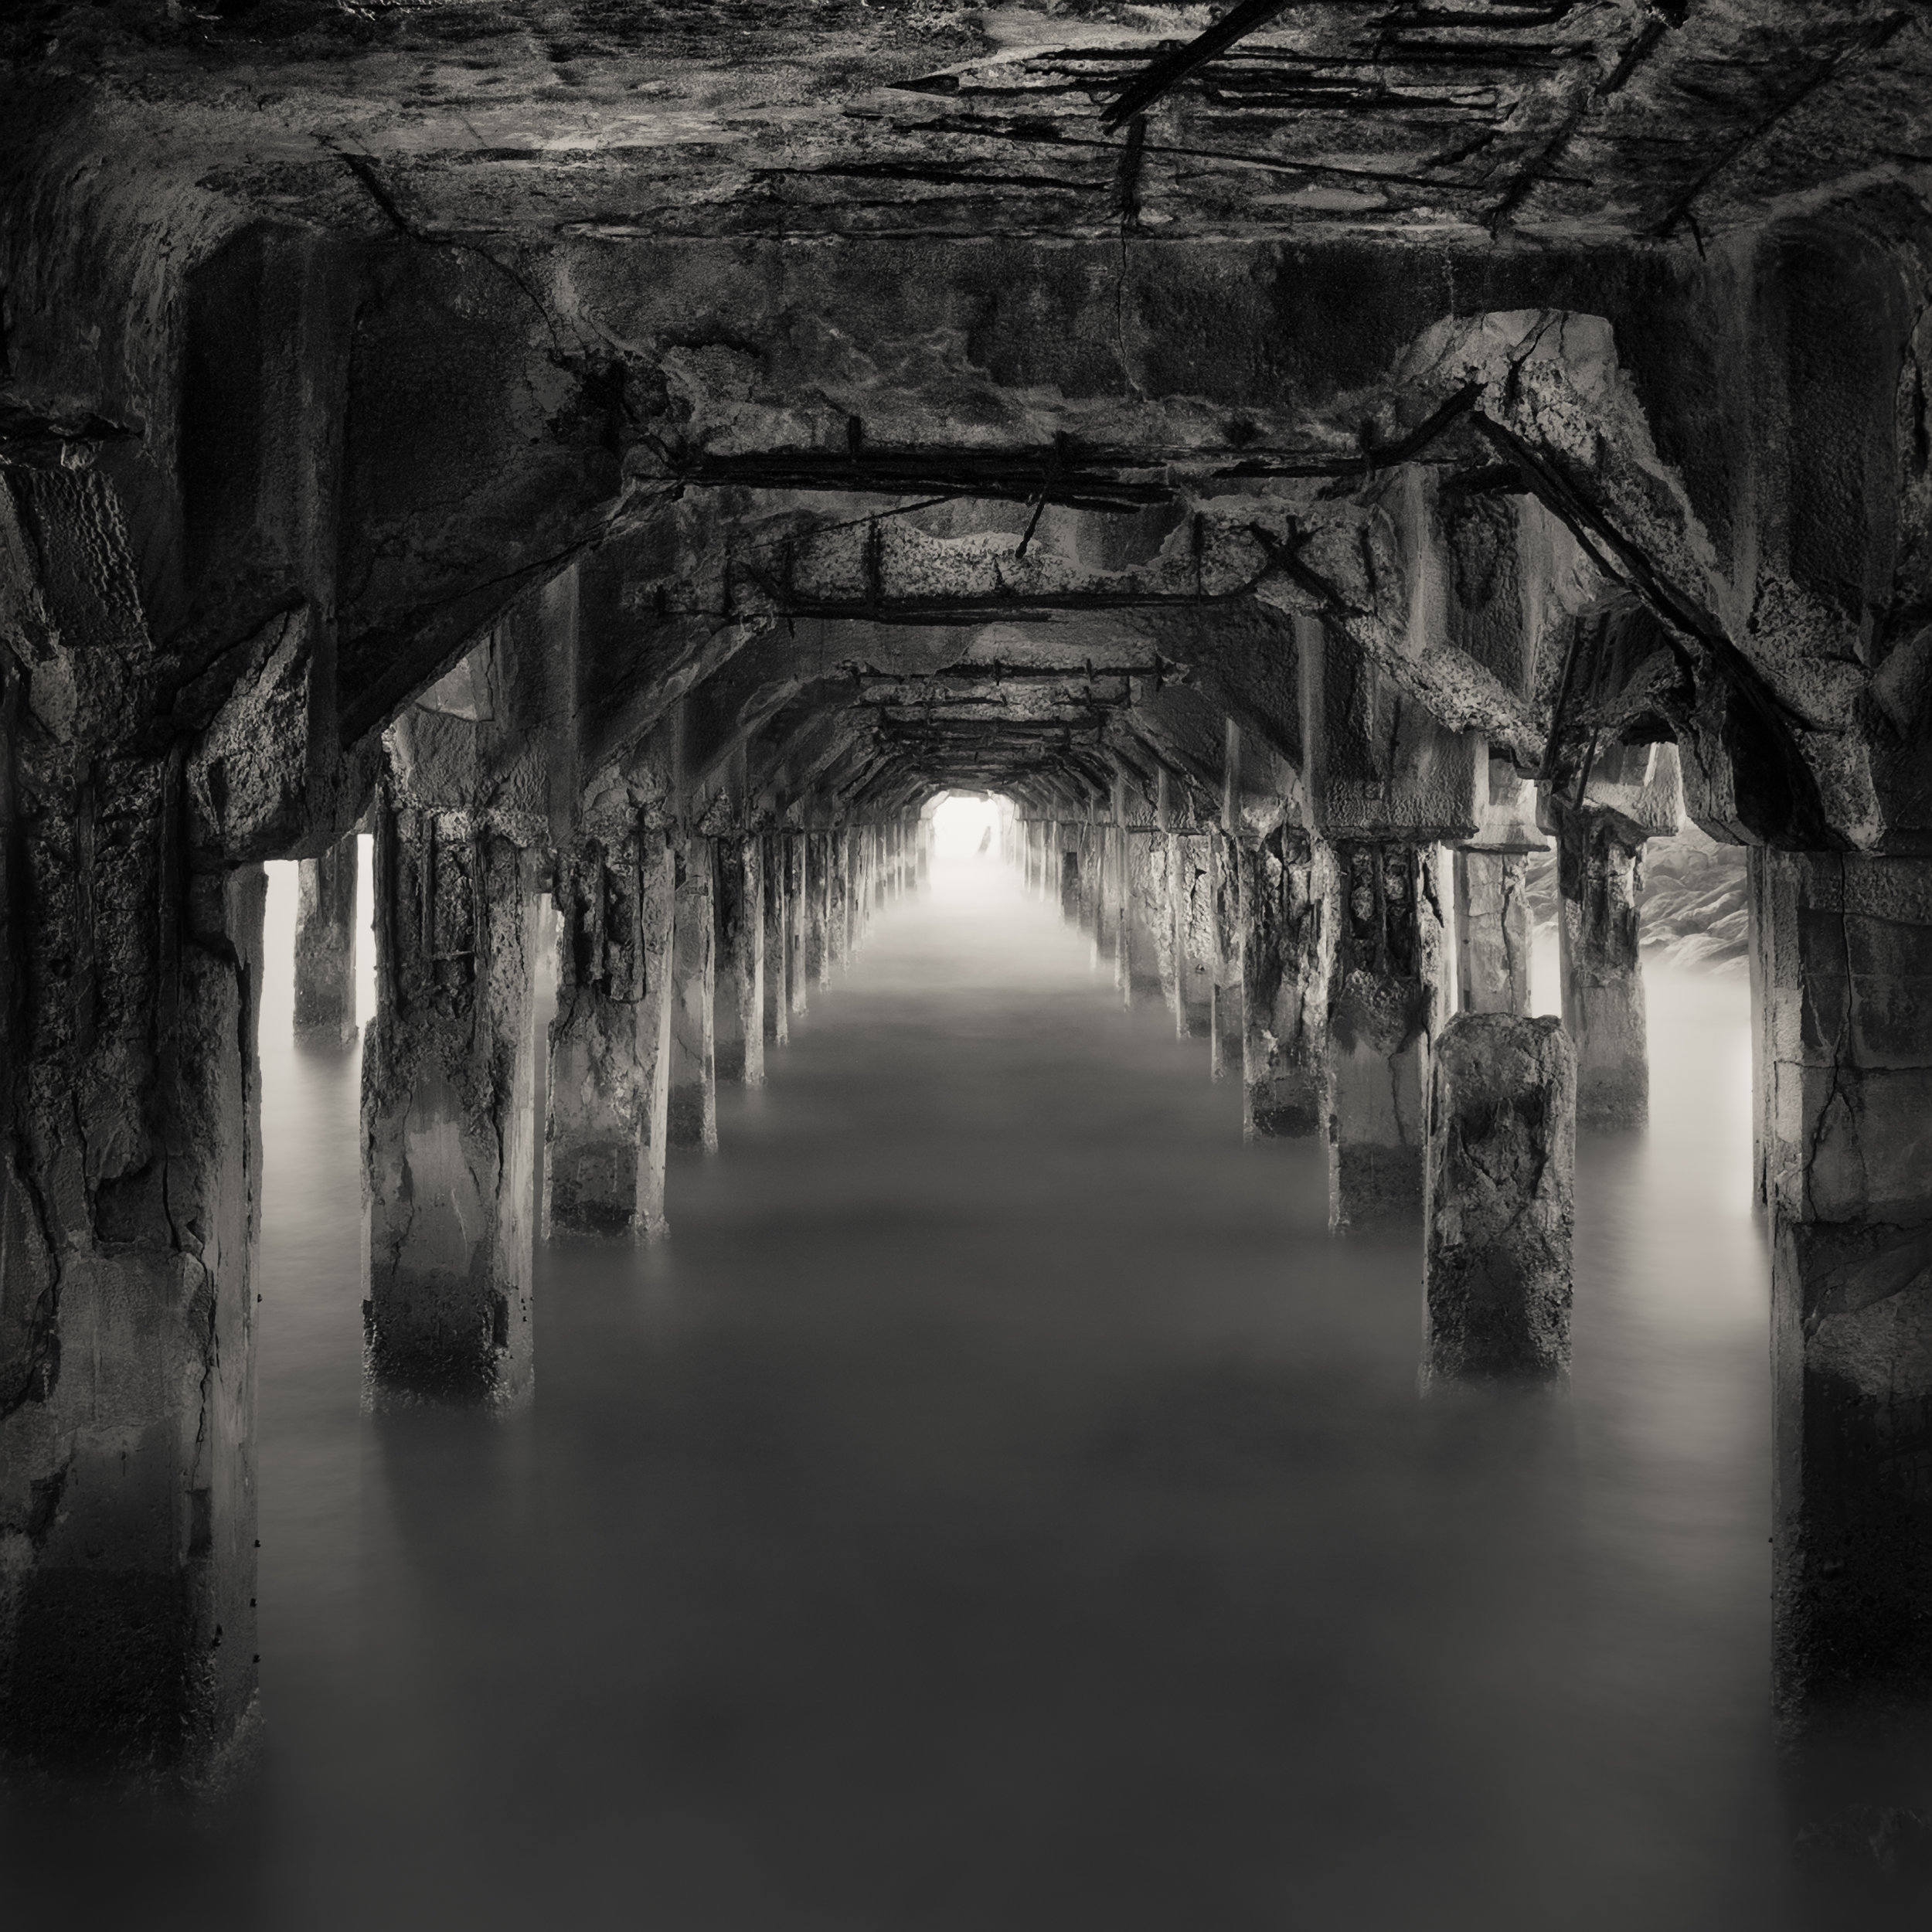 Maui Lahaina black white pier remains underneath catacombs